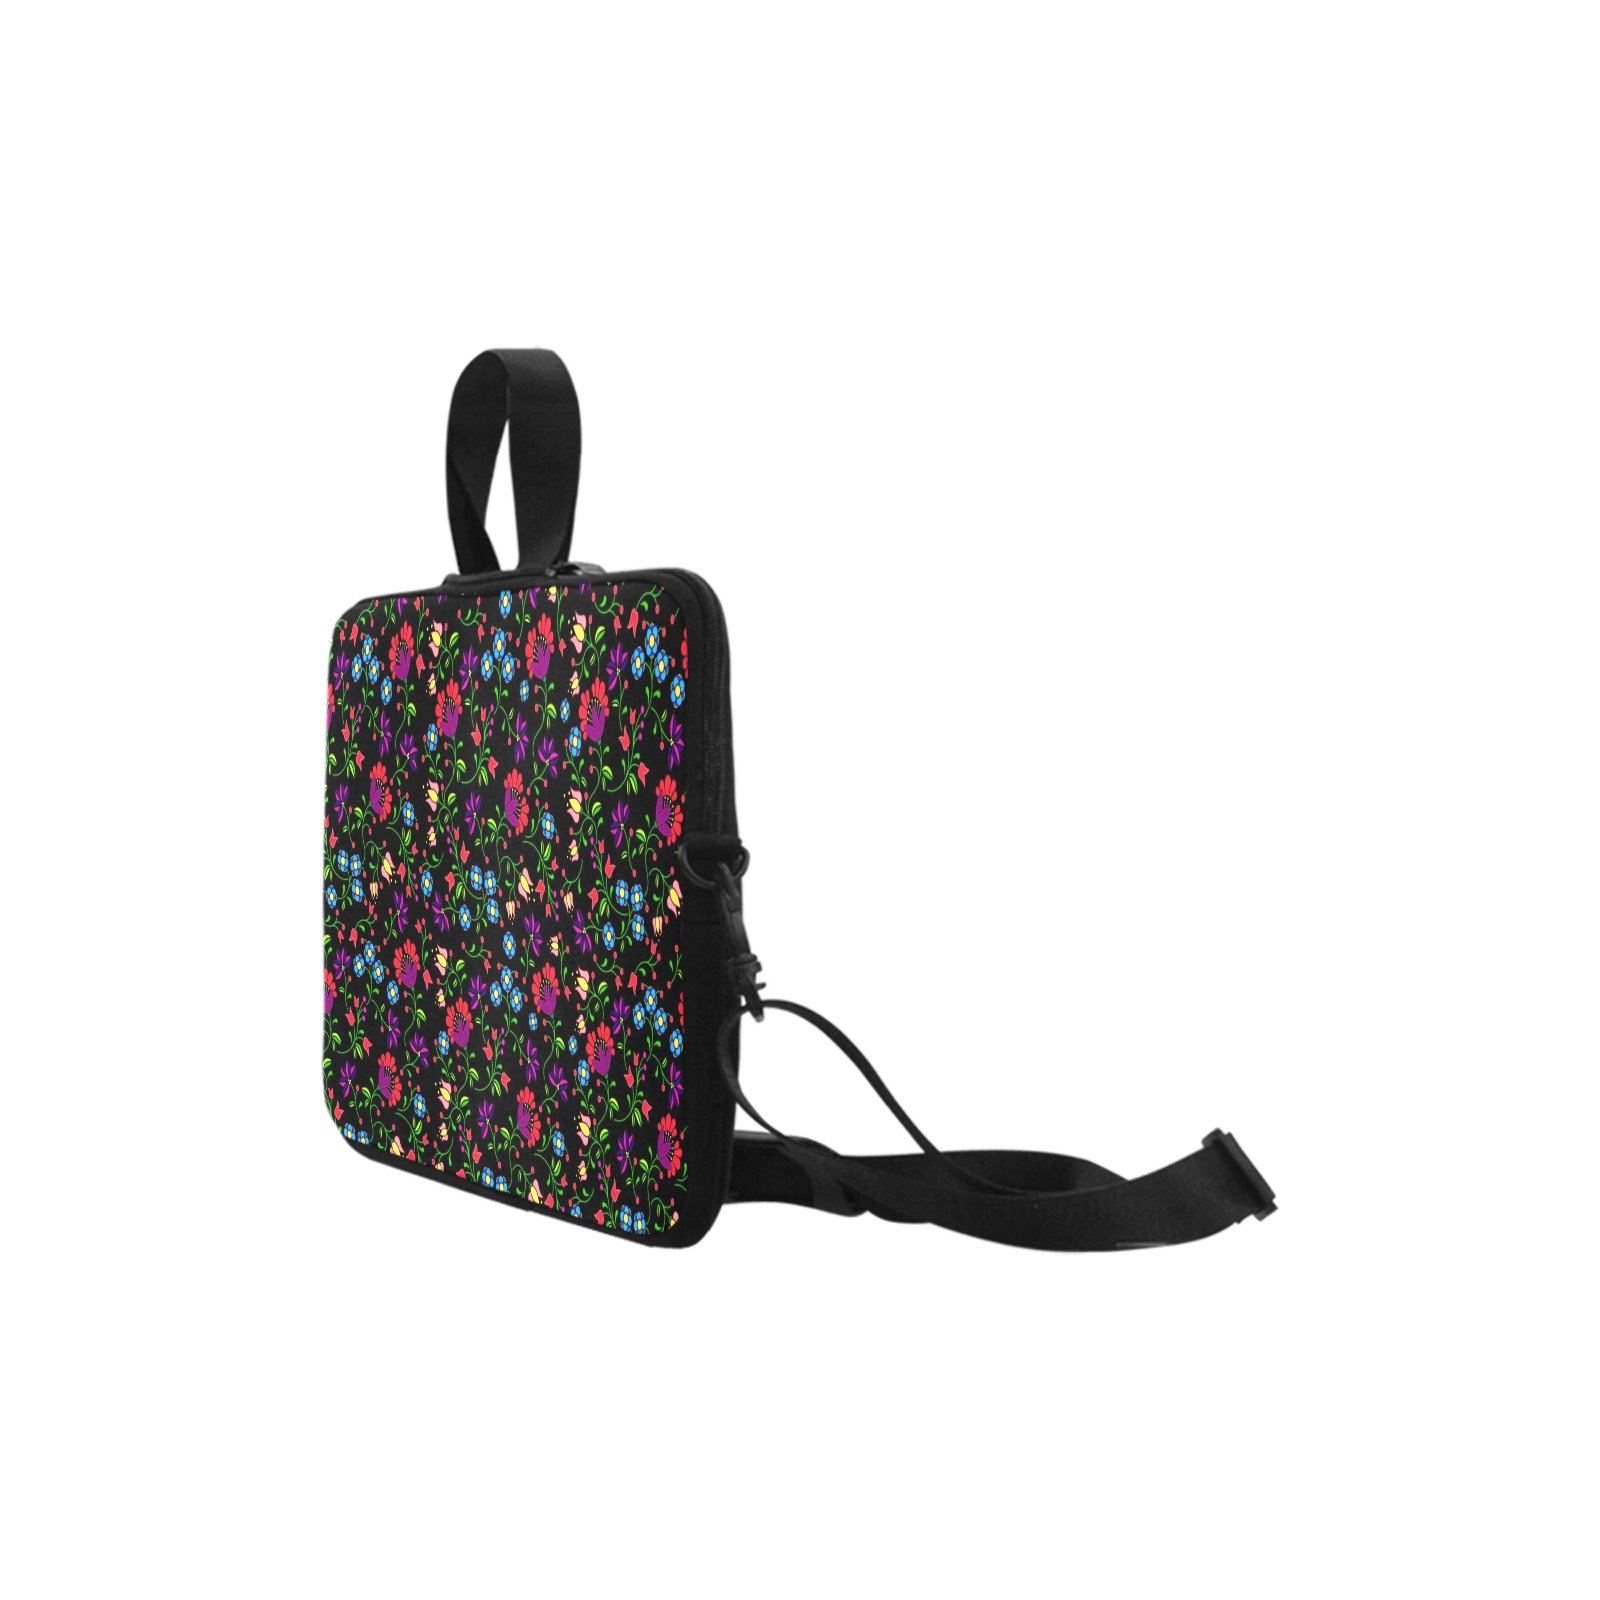 Fleur Indigine Laptop Handbags 14" bag e-joyer 